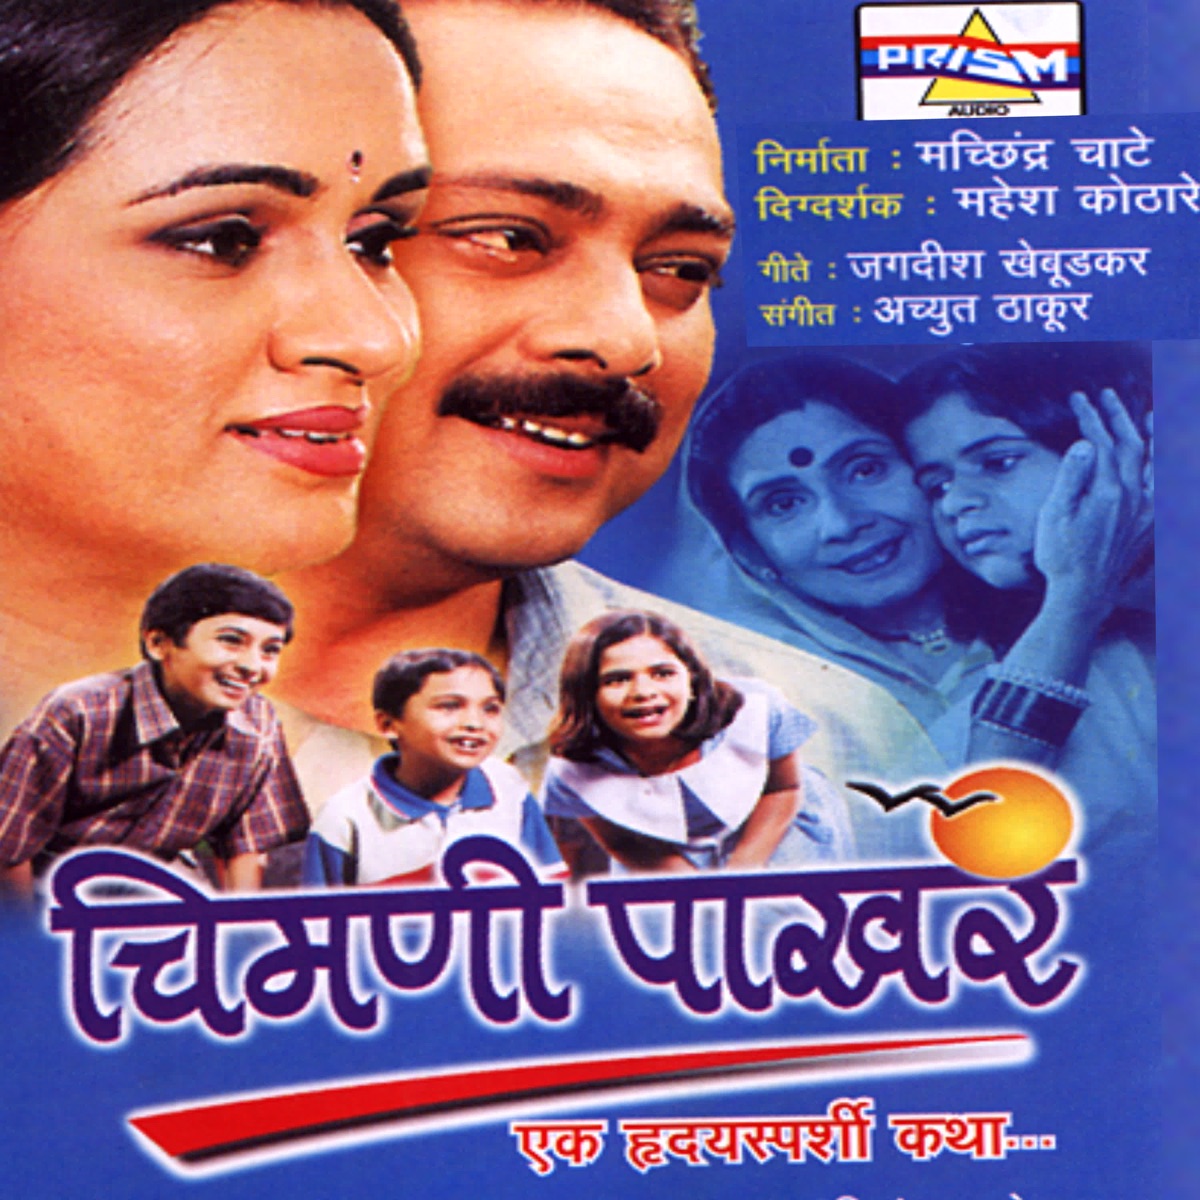 Chimni pakhar movie song download